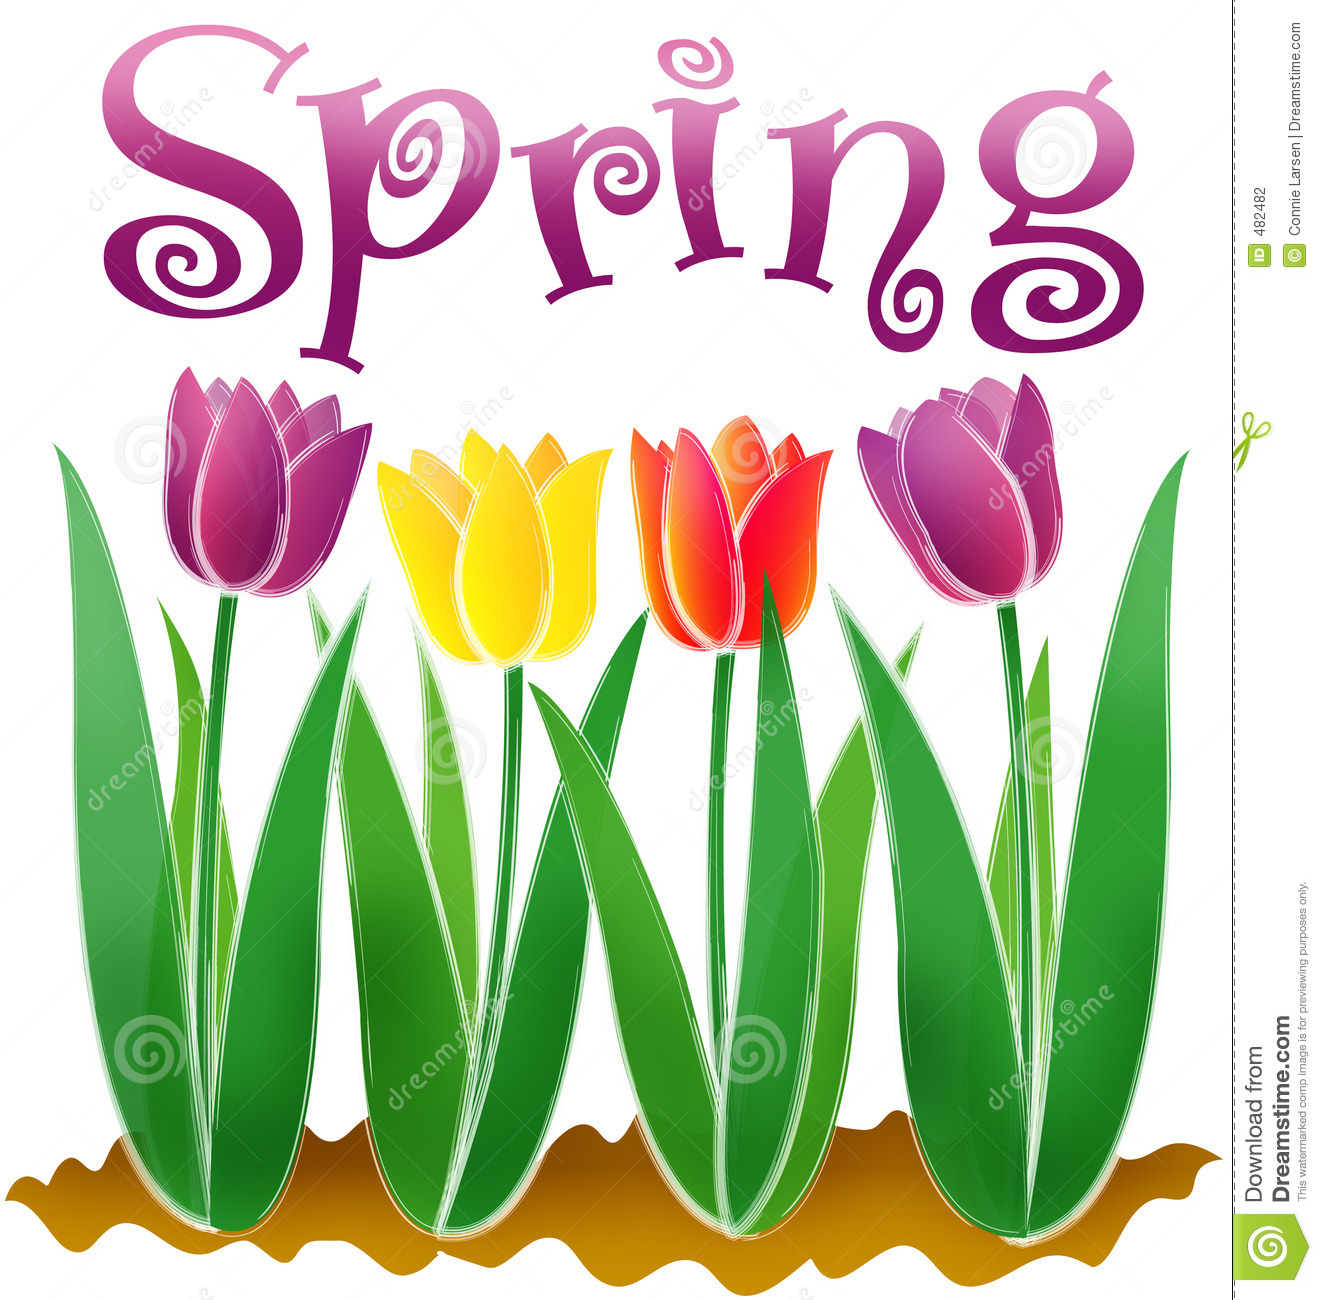 Free clip art of spring pictu - Clip Art For Spring